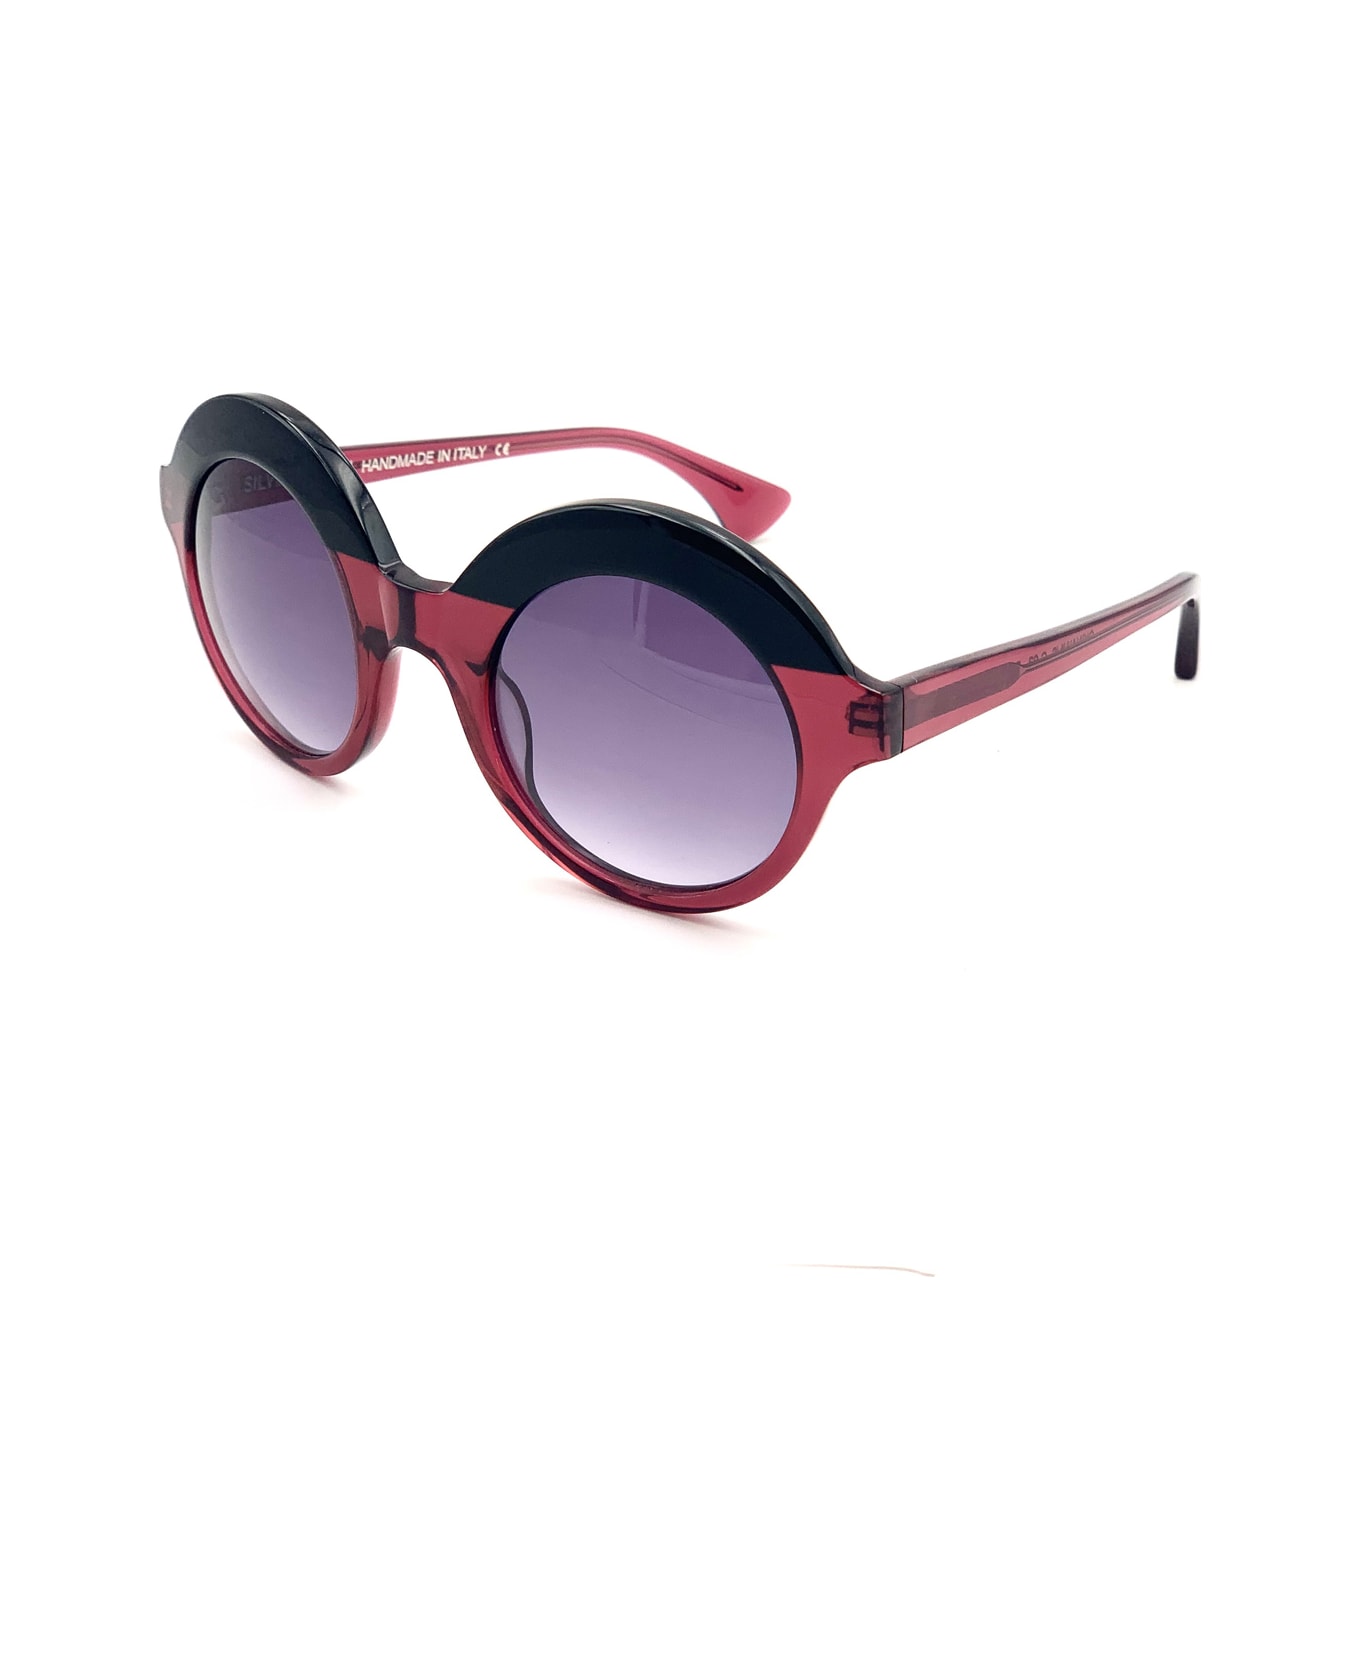 Silvian Heach Okinawa/s 03 Sunglasses - Rosso